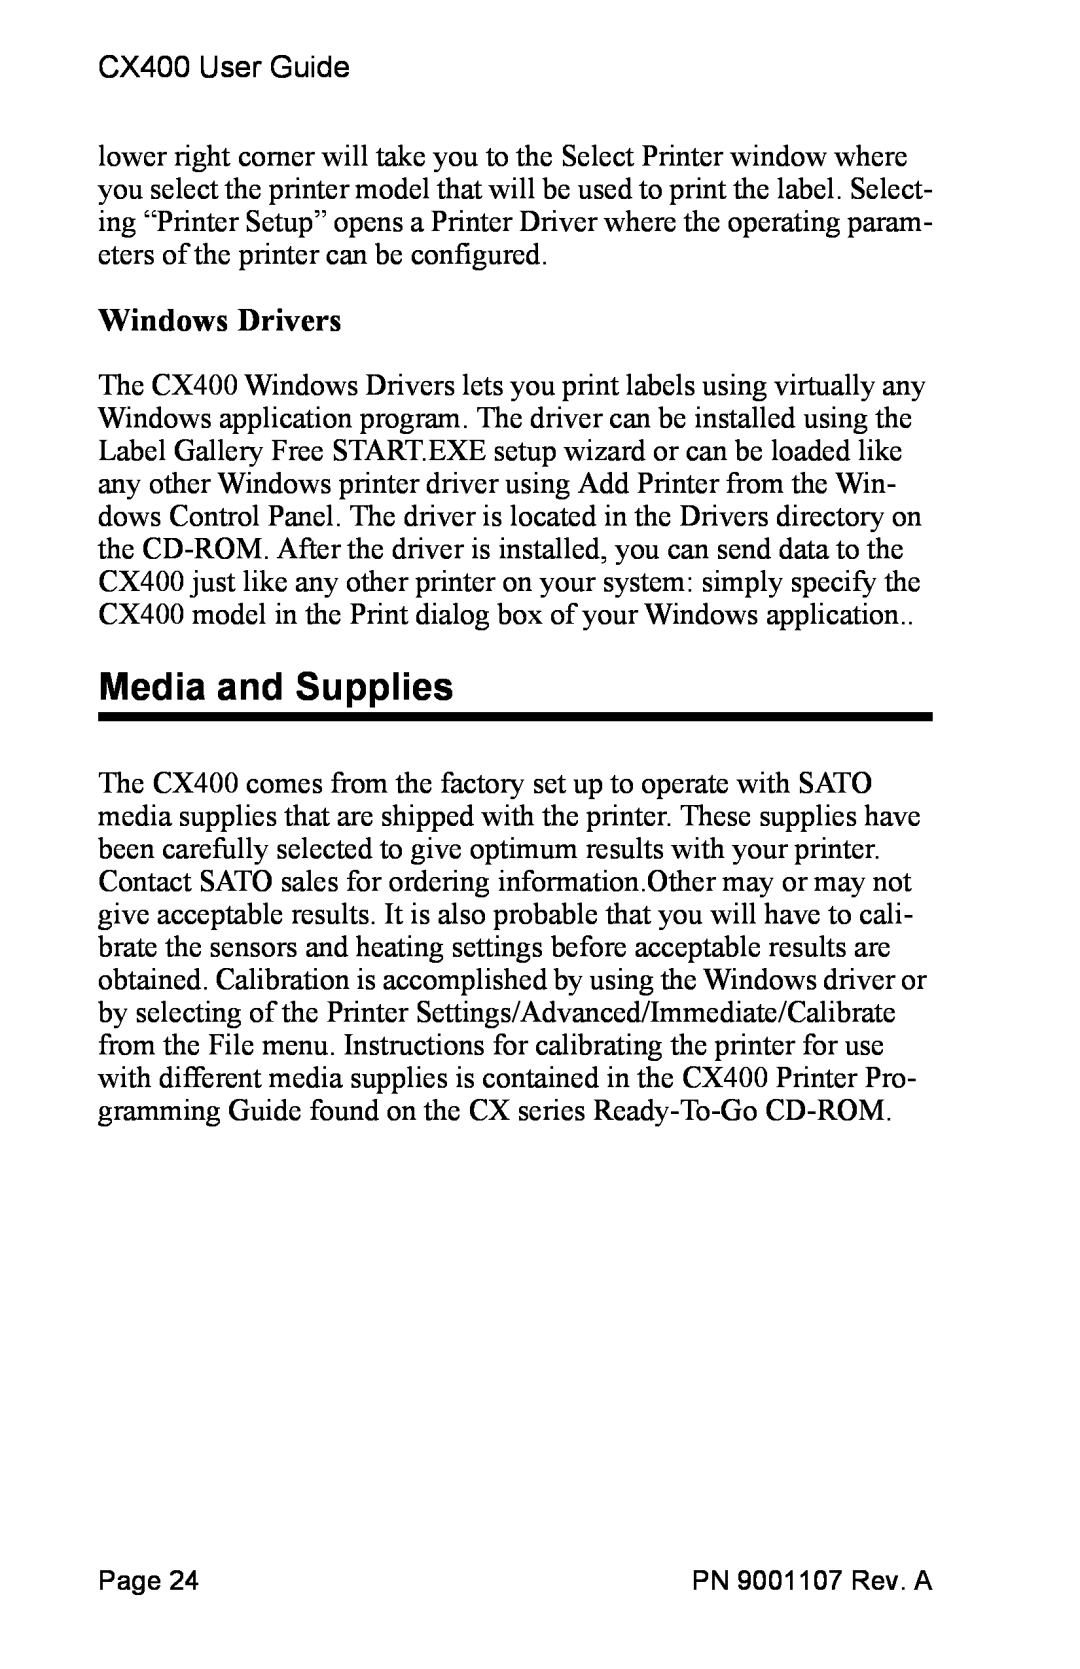 SATO 400 manual Media and Supplies, Windows Drivers 